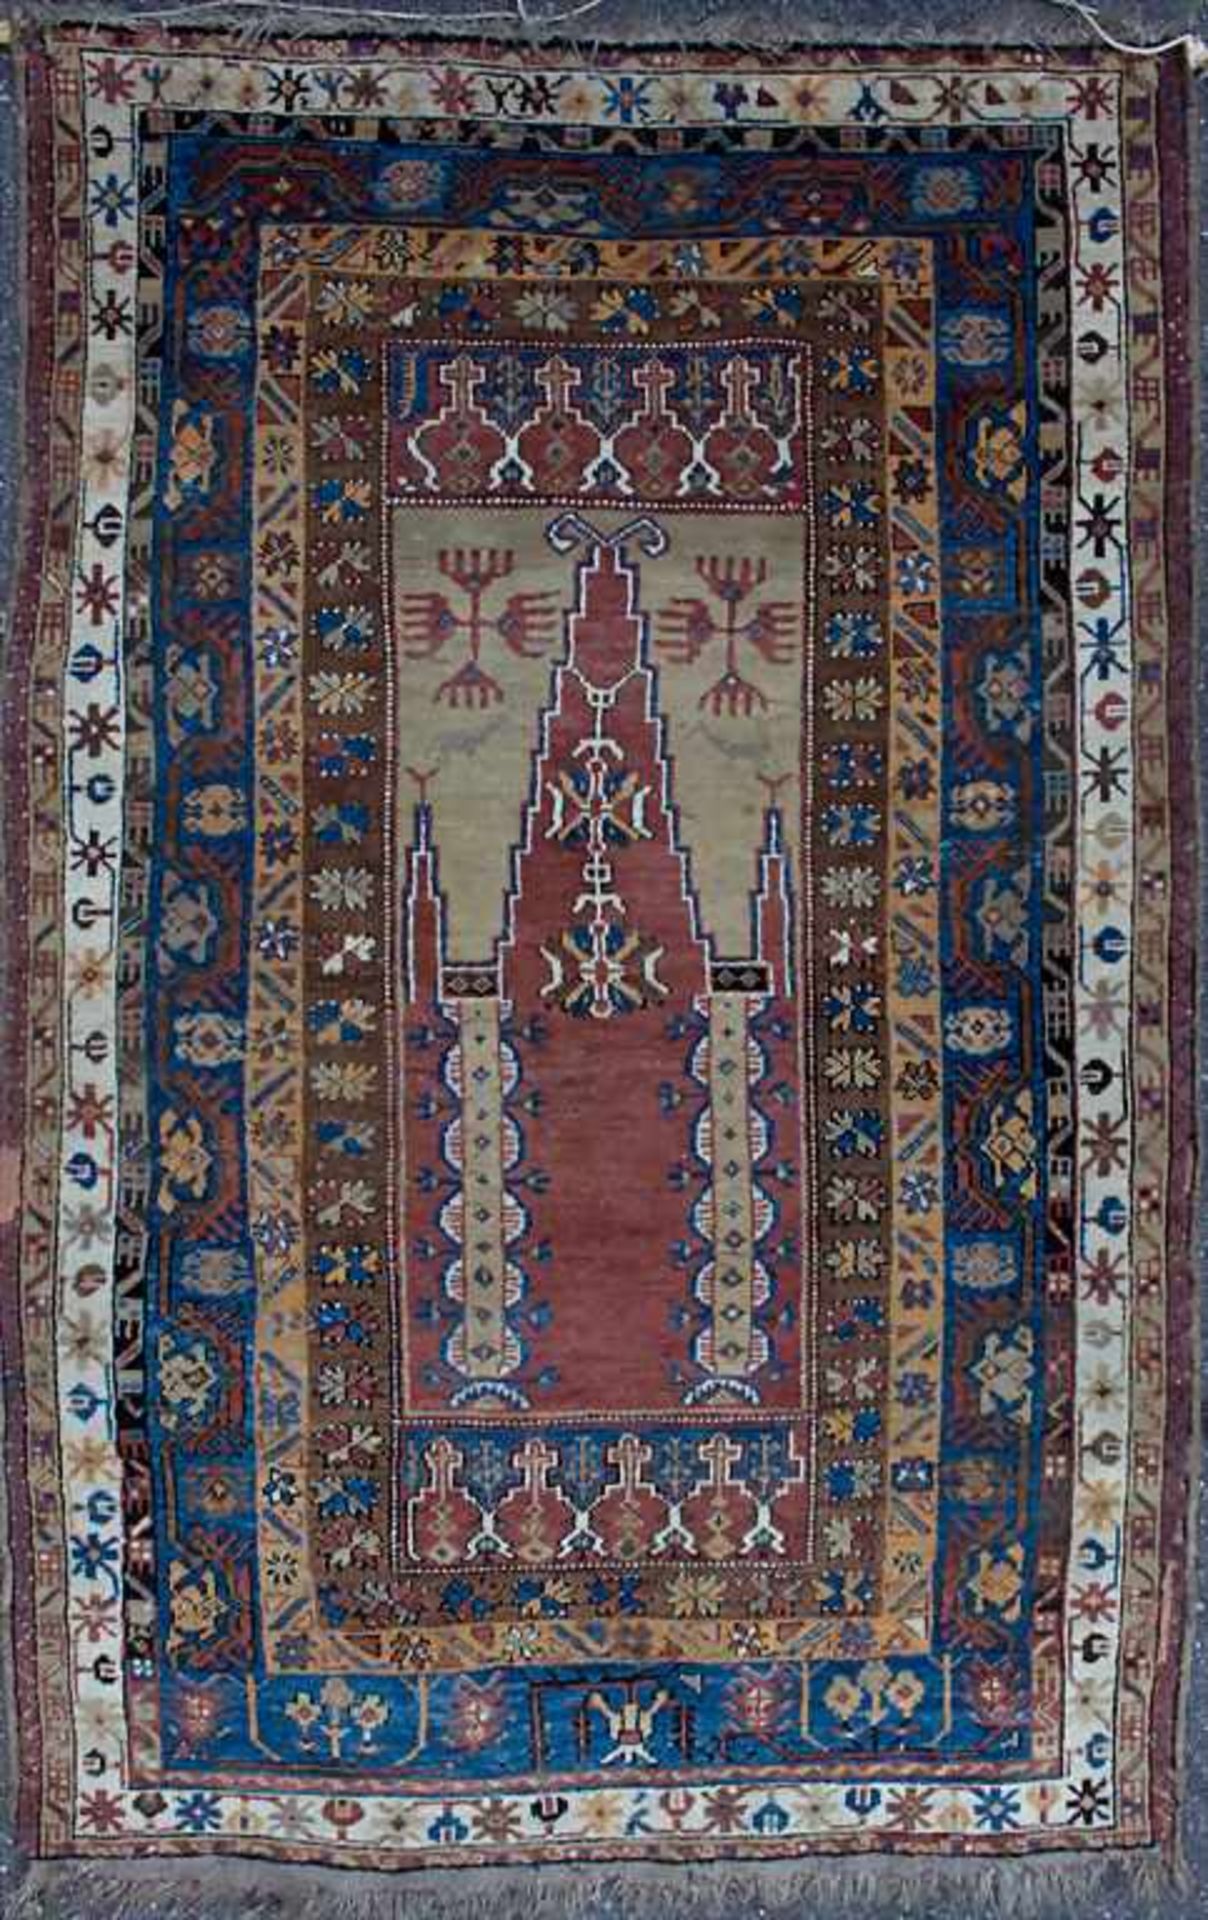 Wandteppich / A wall carpet, KaukasusMaterial: Wolle auf Wolle, Maße: 168 x 106 cm, Zustand: gut,